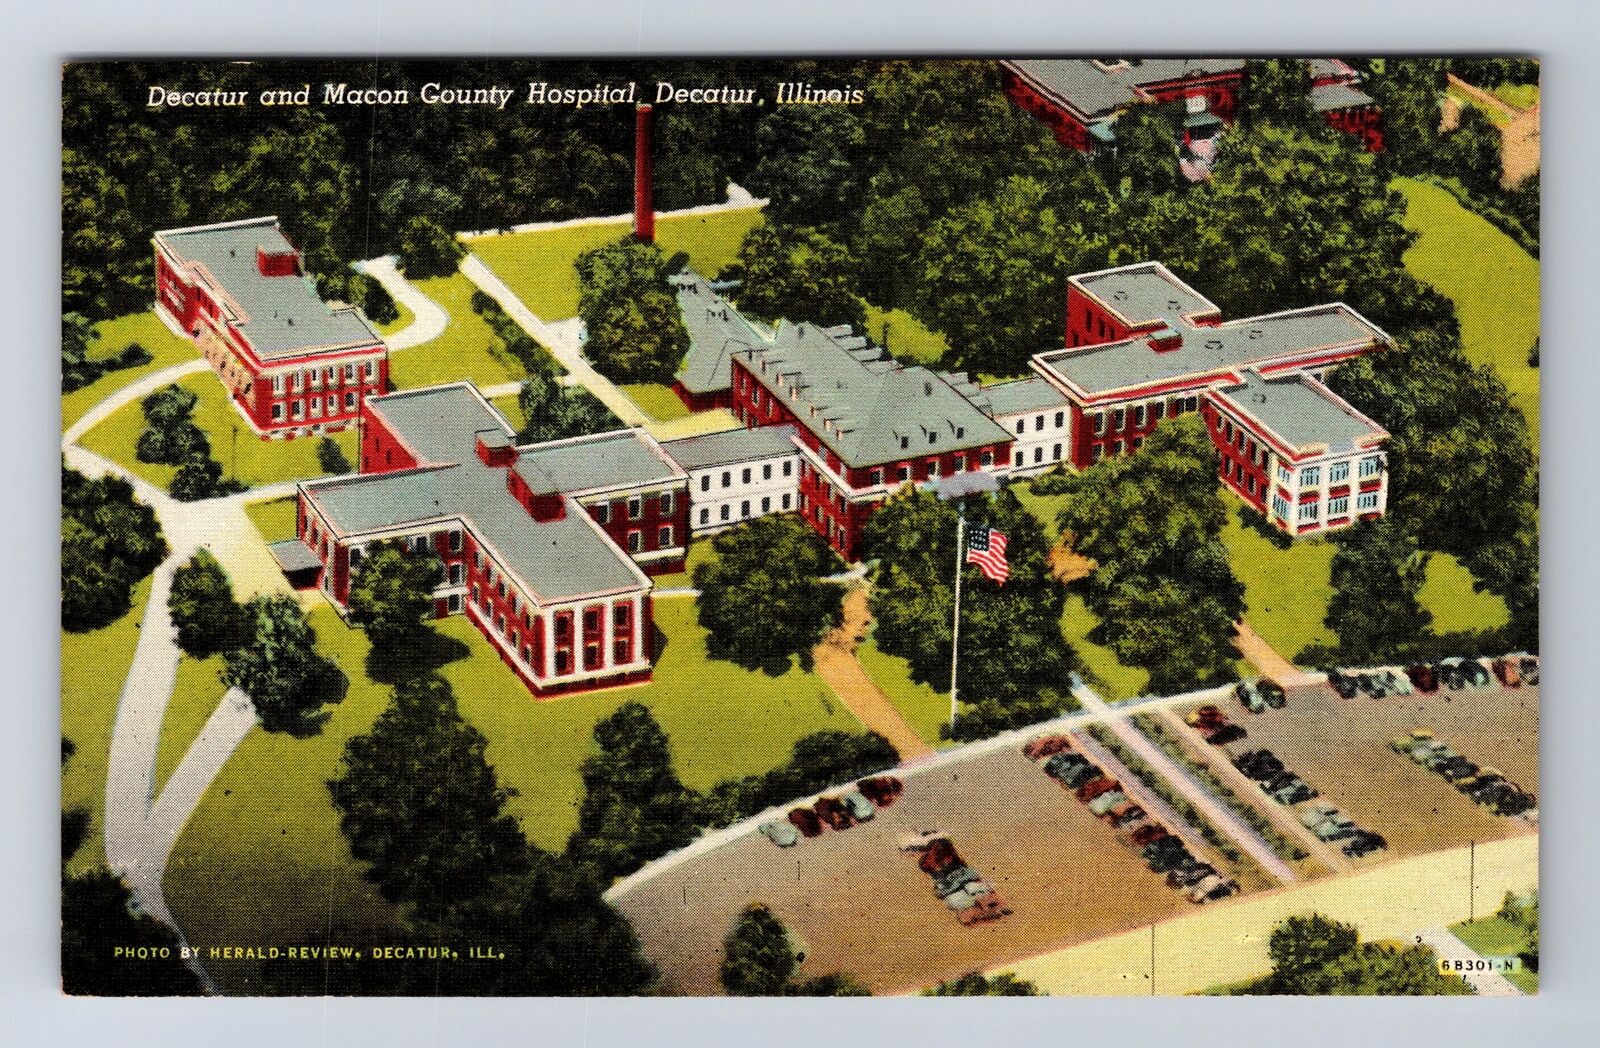 Decatur IL-Illinois Decatur & Macon County Hospital Aerial View Vintage Postcard